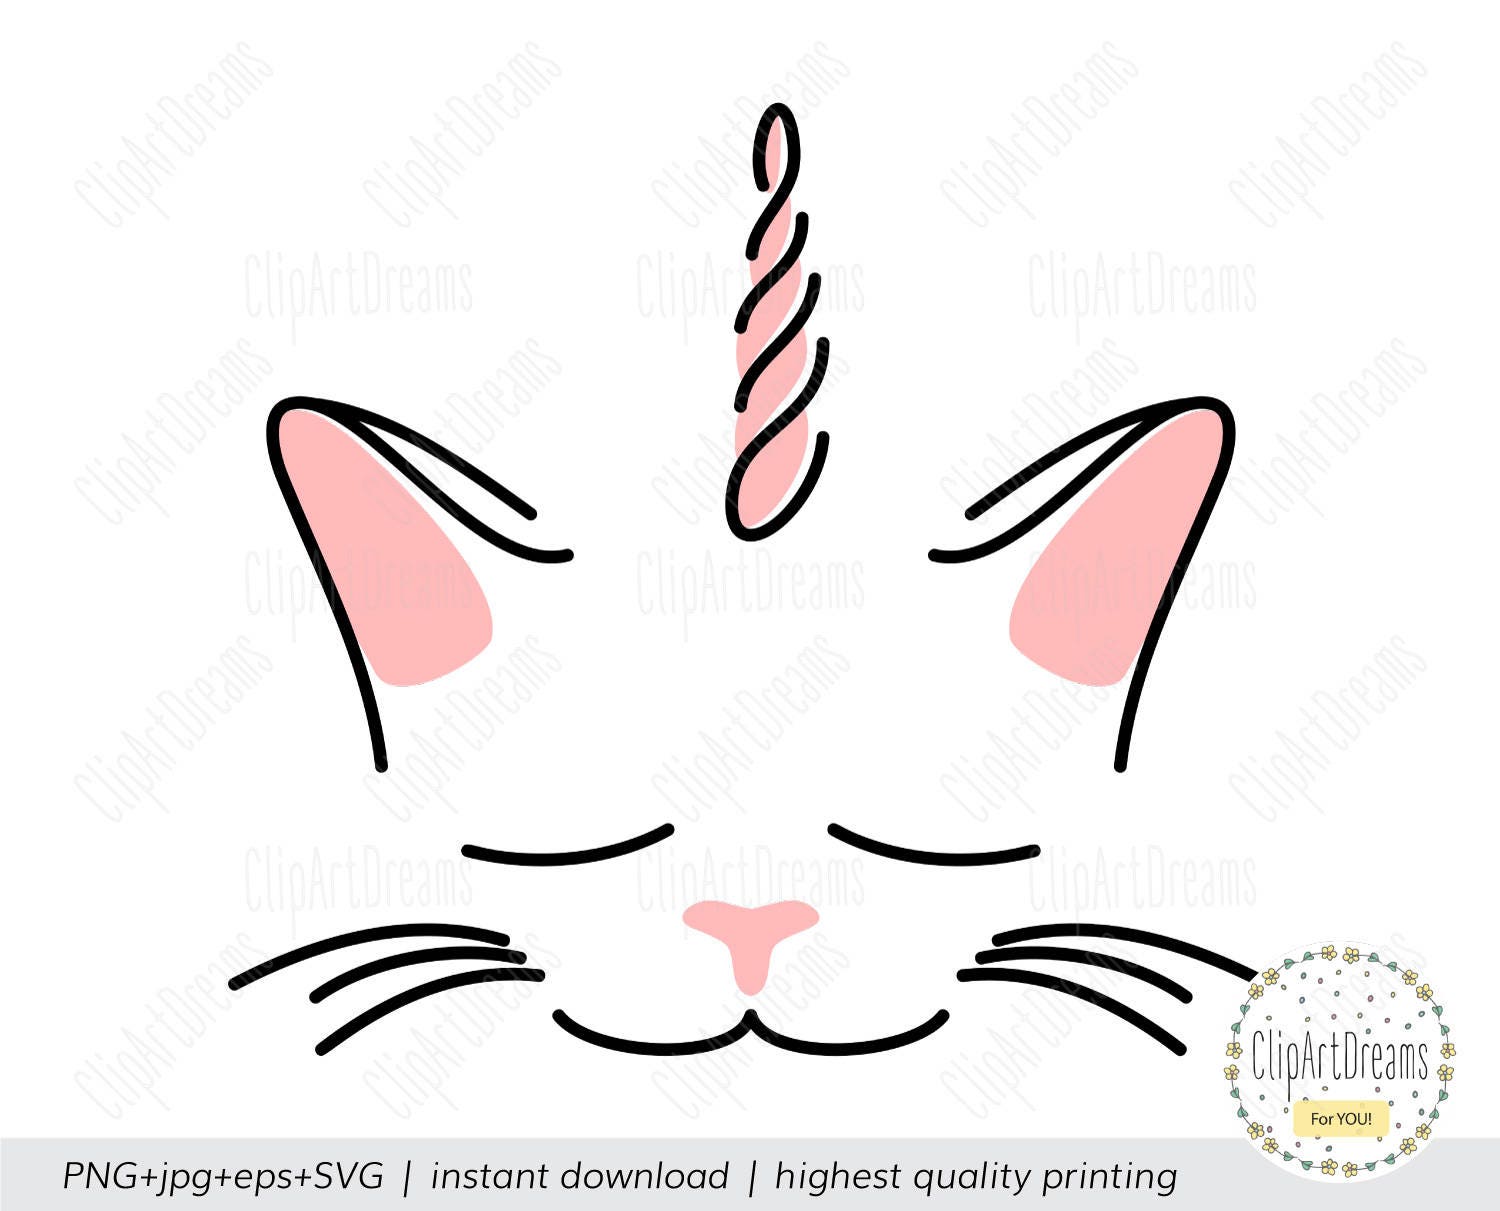 Caticorn SVG Kitticorn Svg Cat lover gift svg cut file | Etsy